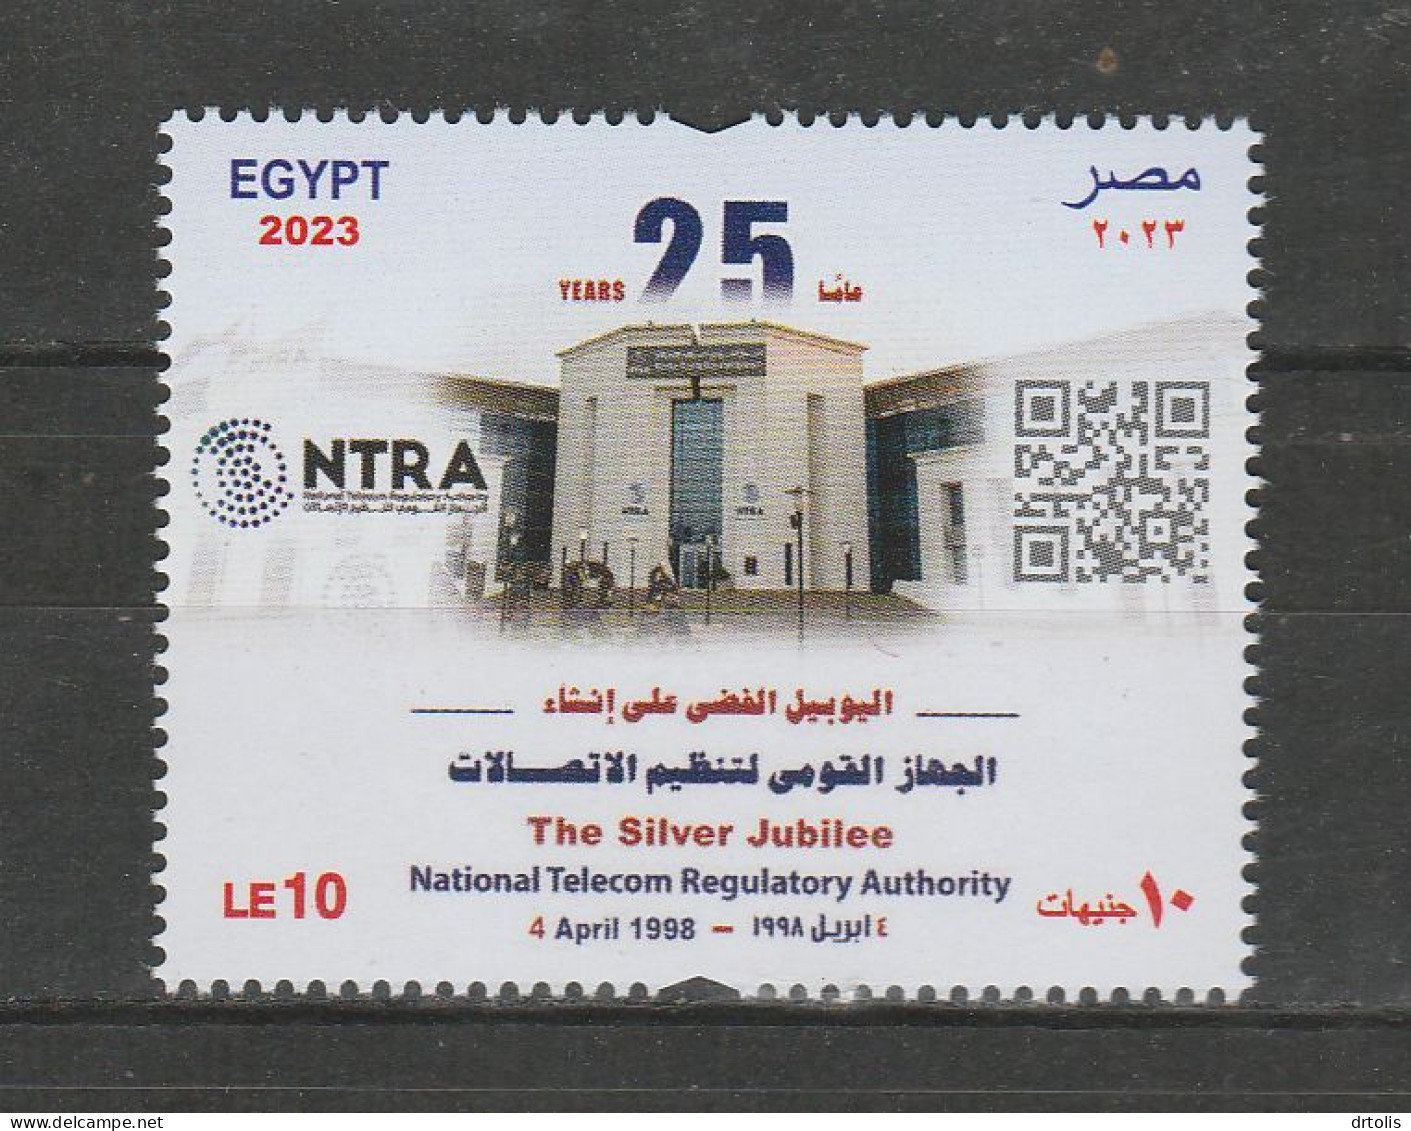 EGYPT / 2023 / NTRA ( NATIONAL TELECOM REGULATORY AUTHORITY )/ MNH / VF - Ongebruikt